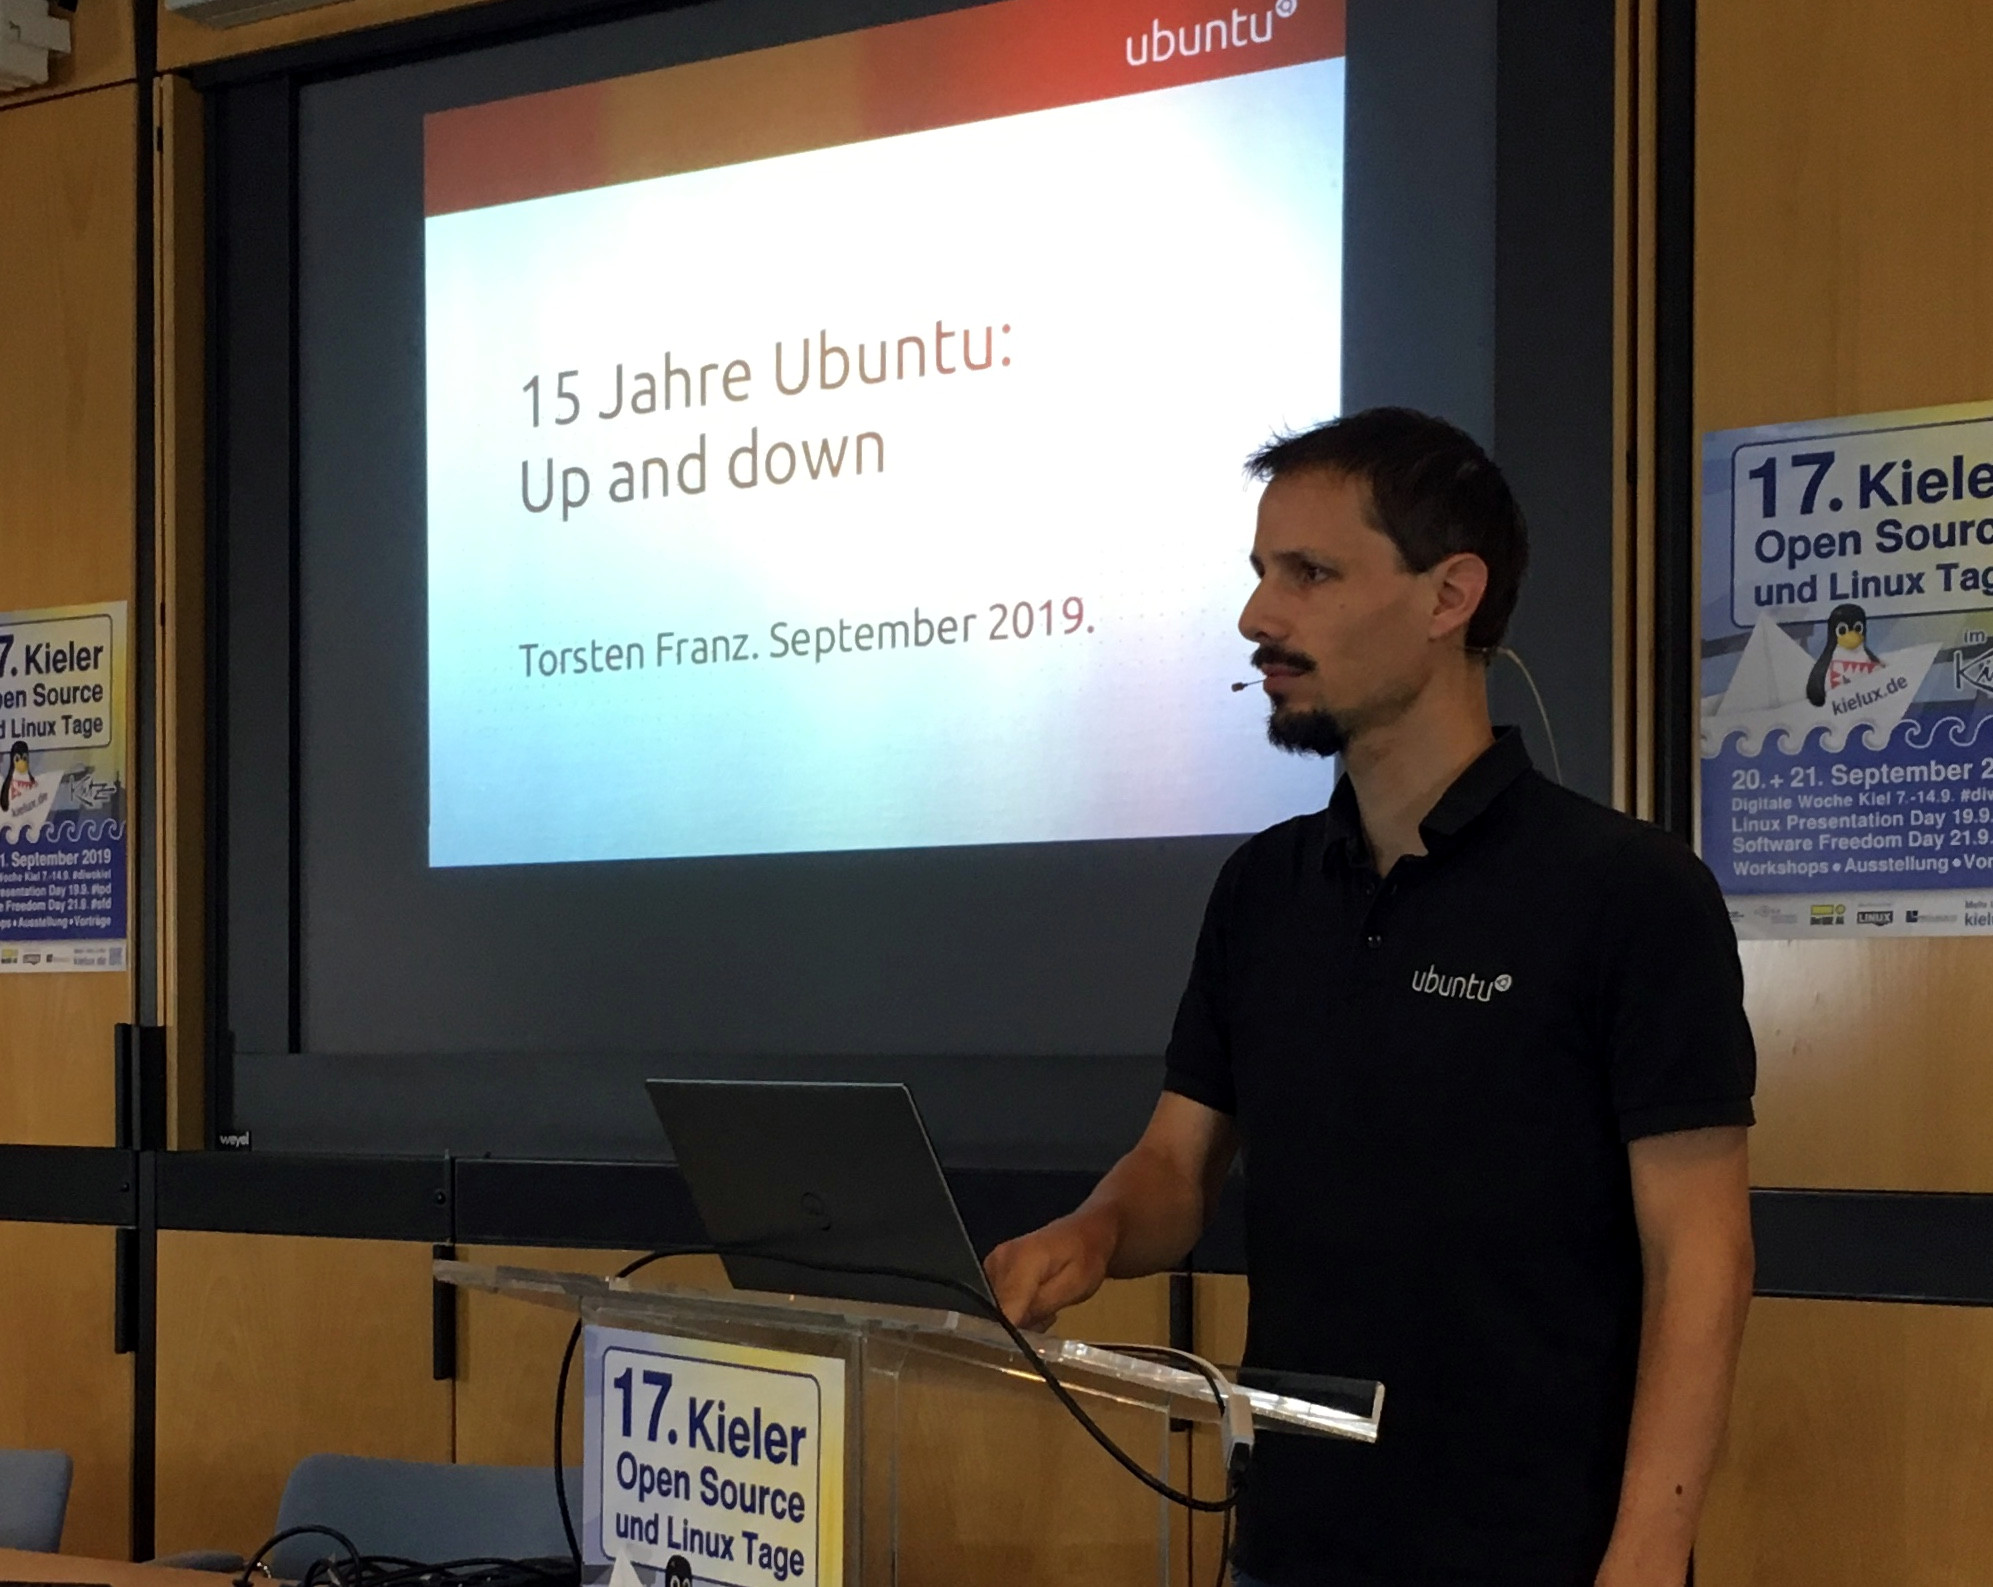 15 Jahre Ubuntu (Foto: Christian Imhorst, CC-0)